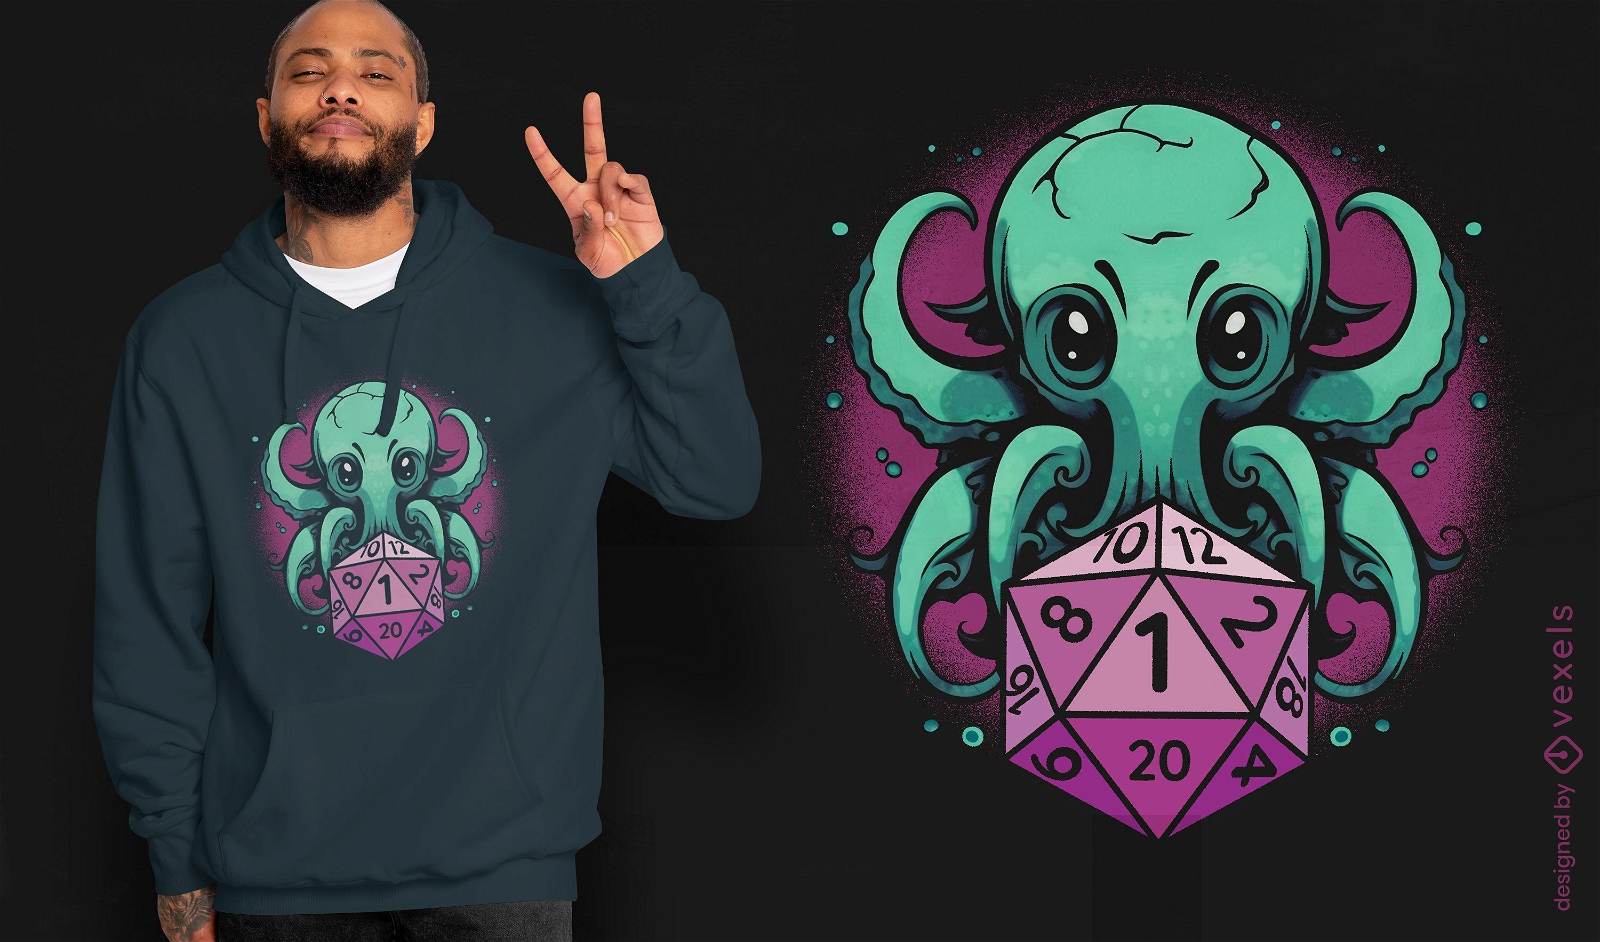 Cosmic octopus t-shirt design